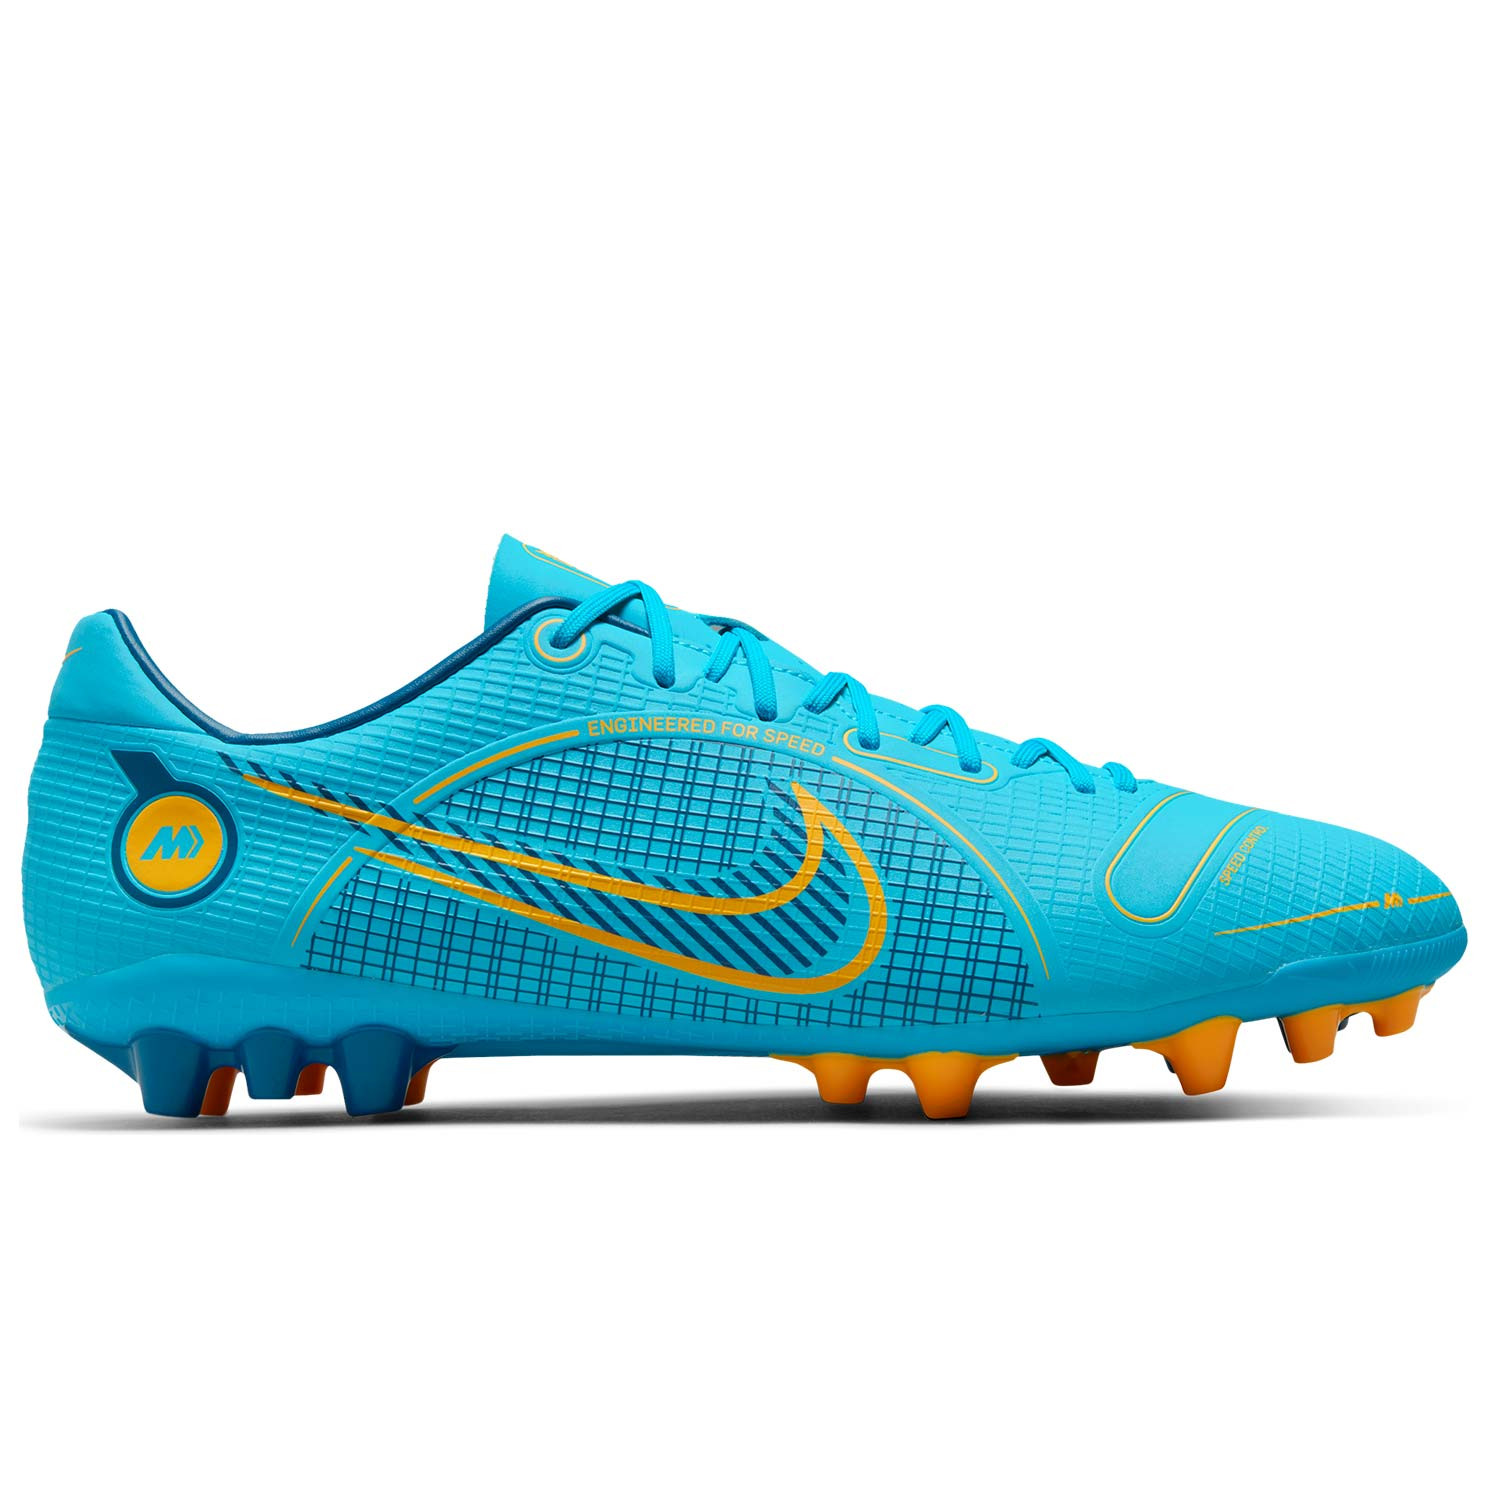 Botas fútbol Nike Vapor AG azules |